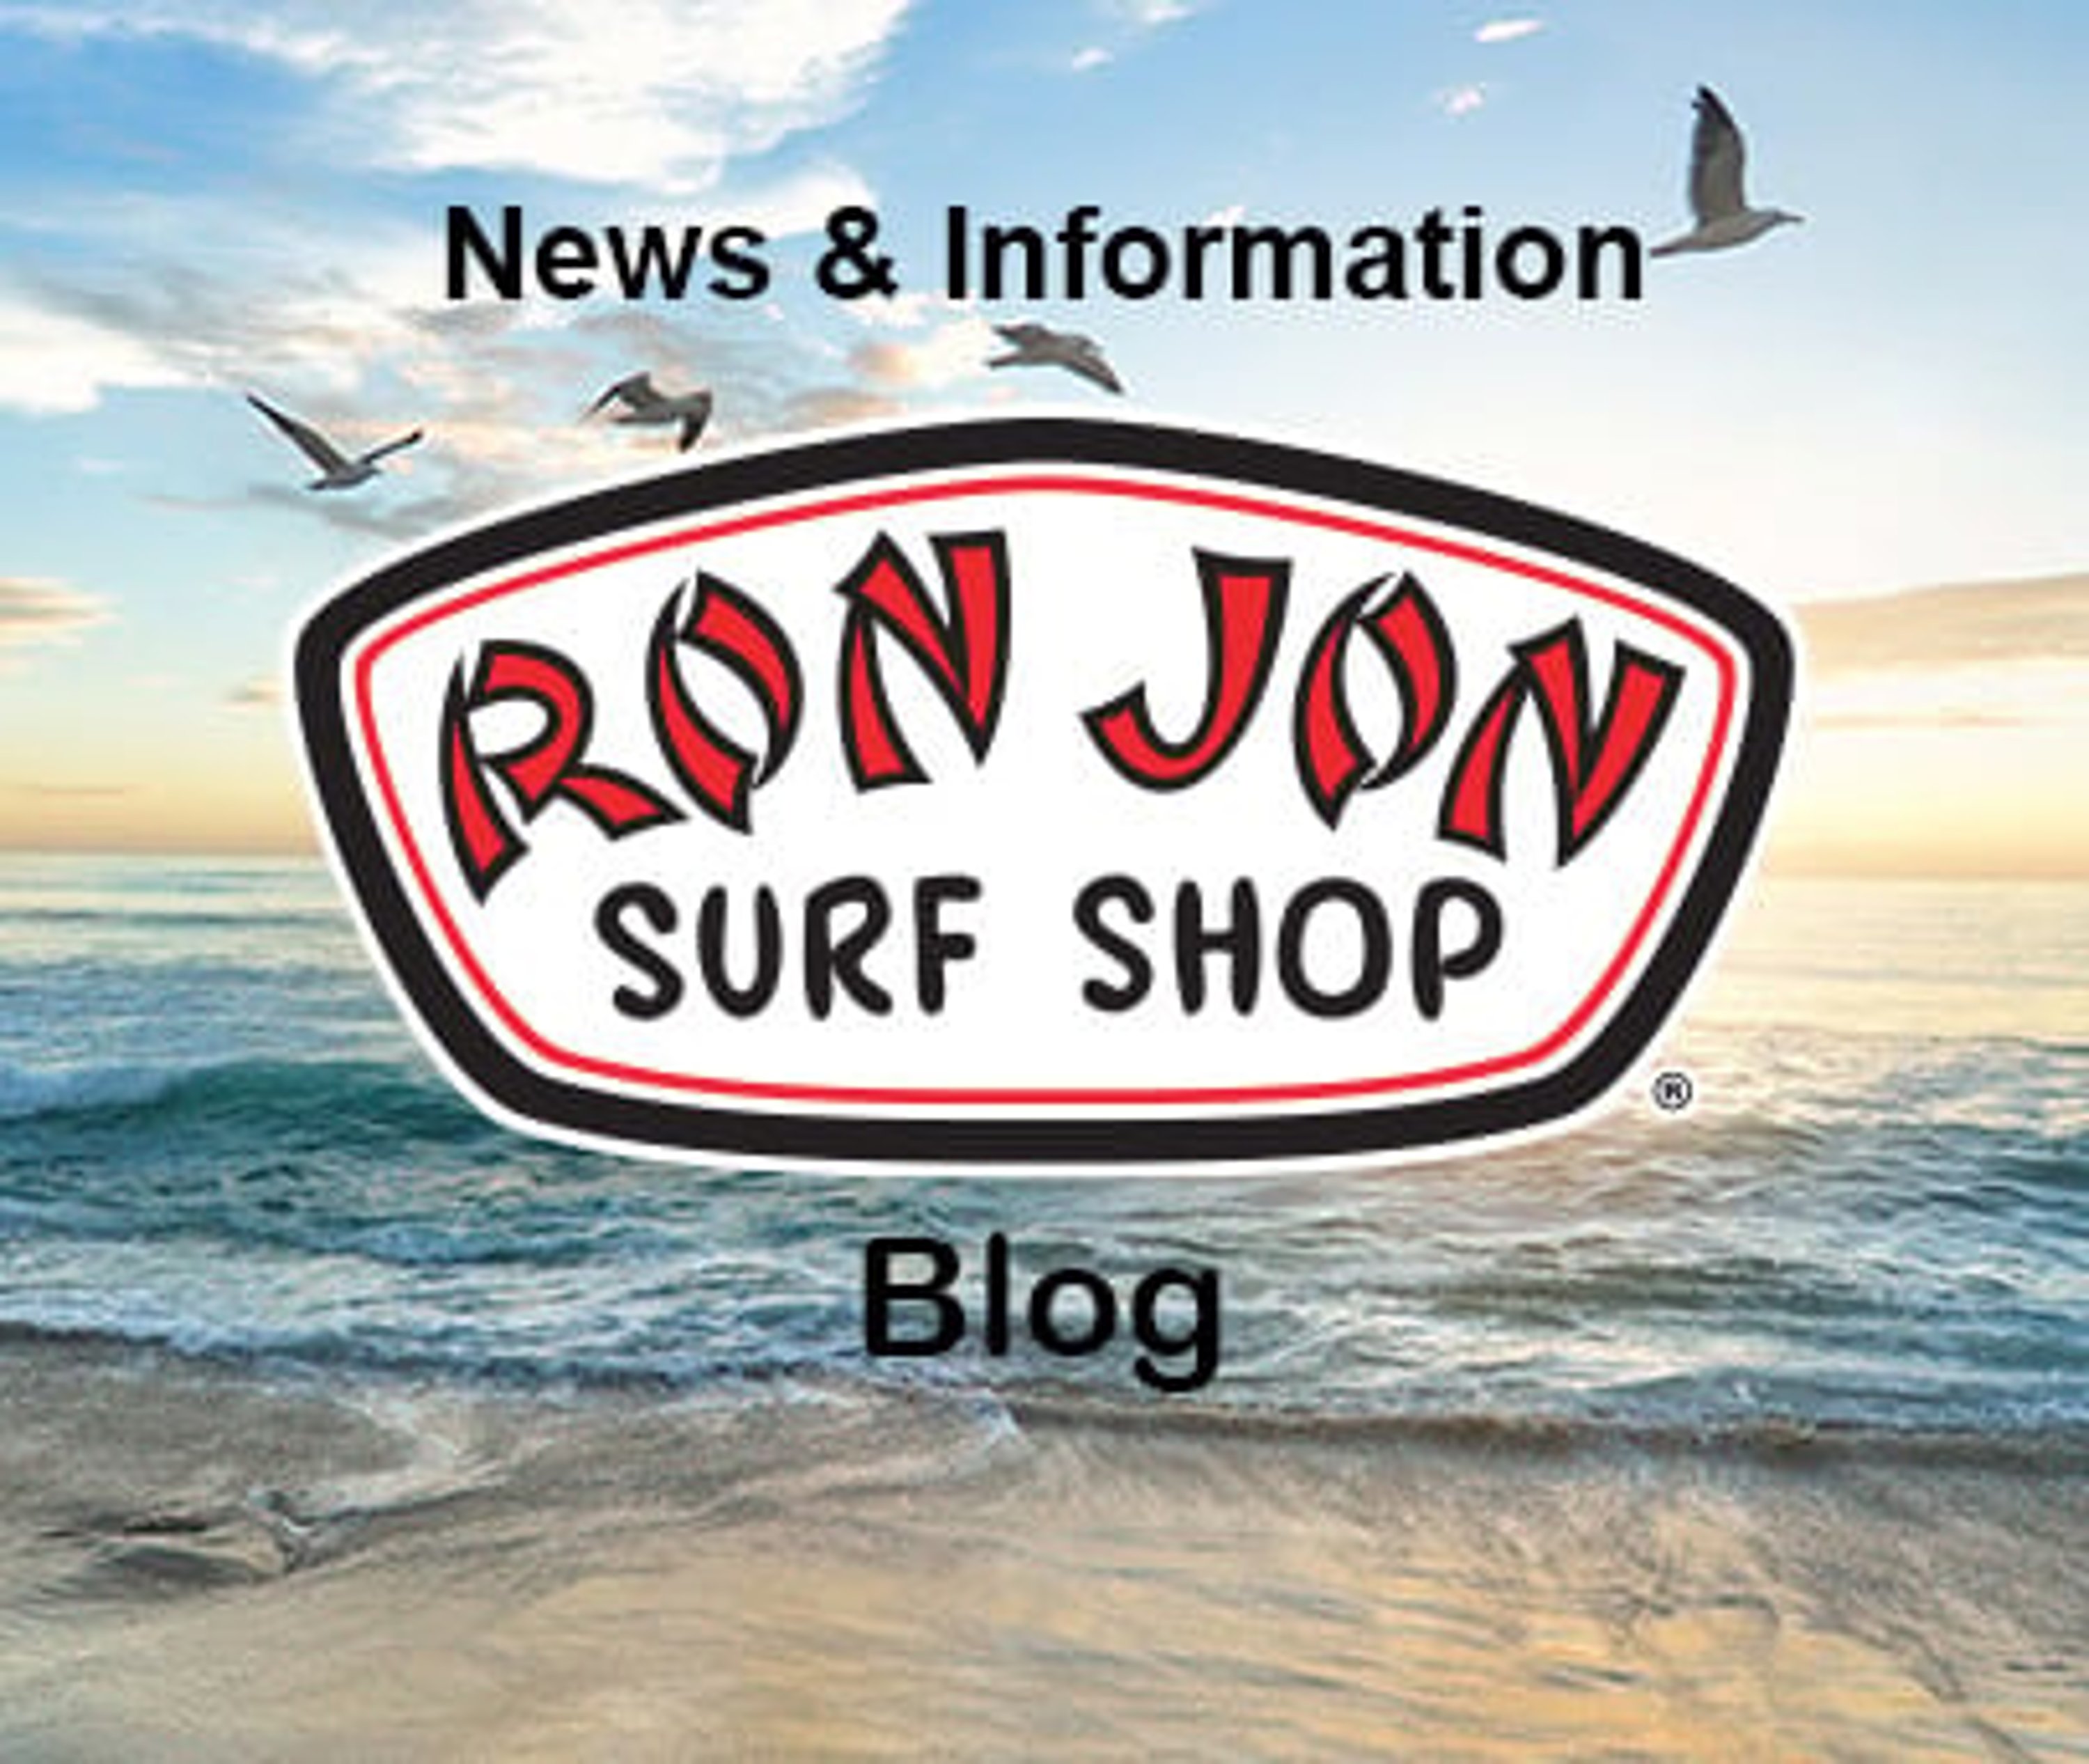 News and Information - Ron Jon Surf Shop Blog